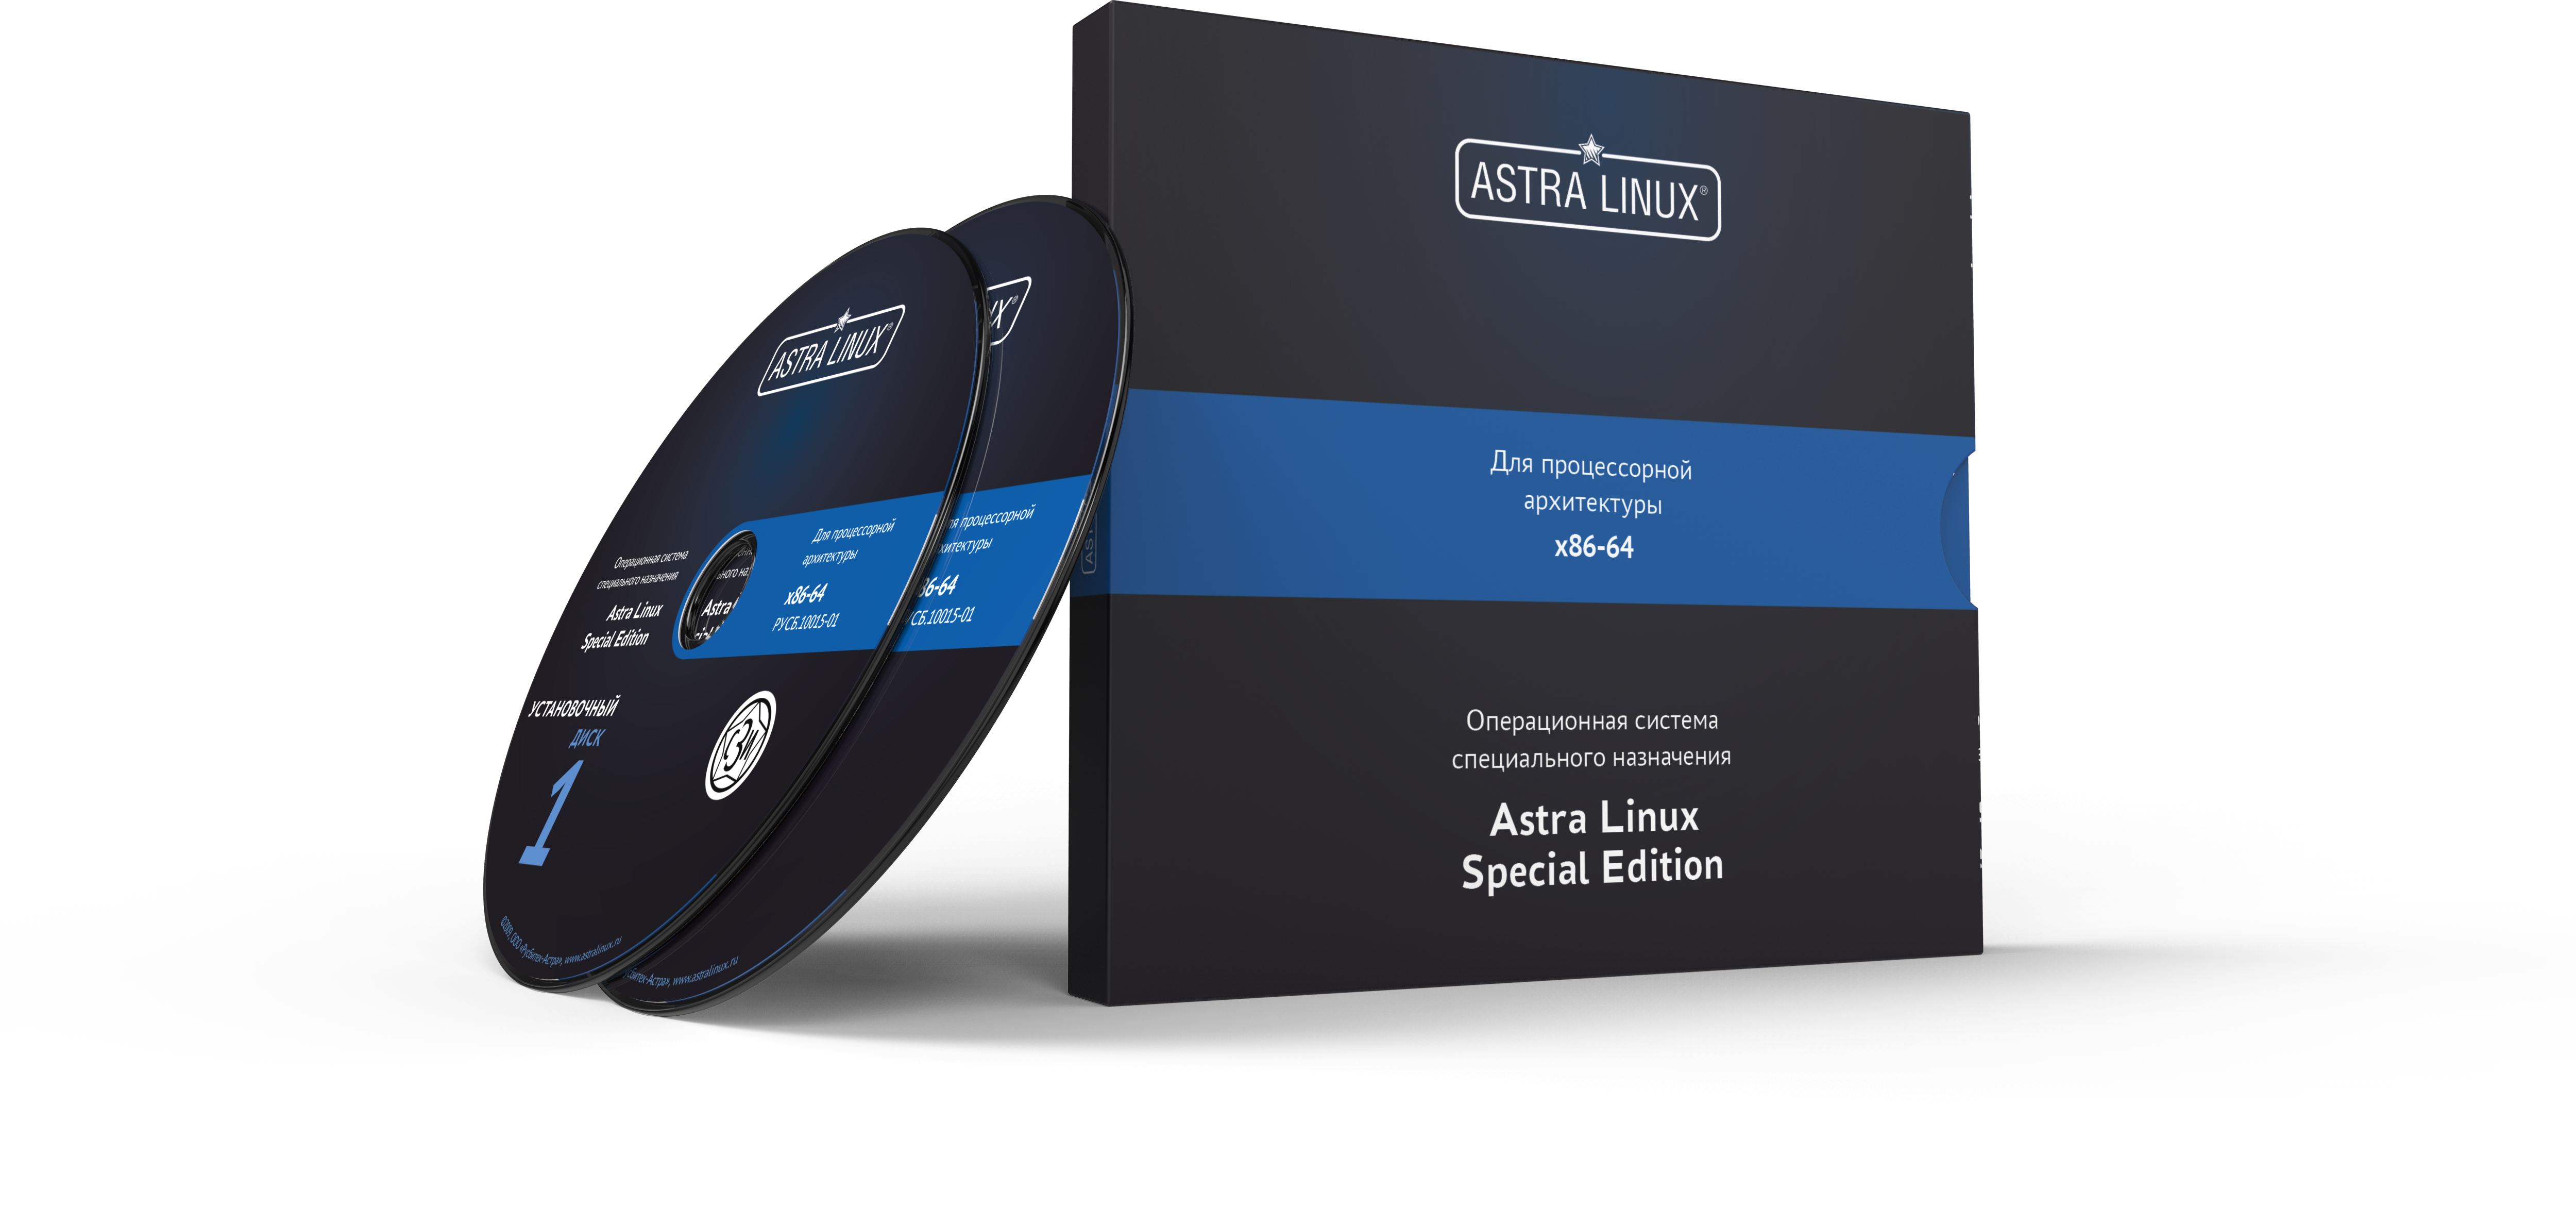 Astra Linux Special Edition 1.7 - Орел, электронный, без огр. срока, ТП "Стандарт" на 36 мес.